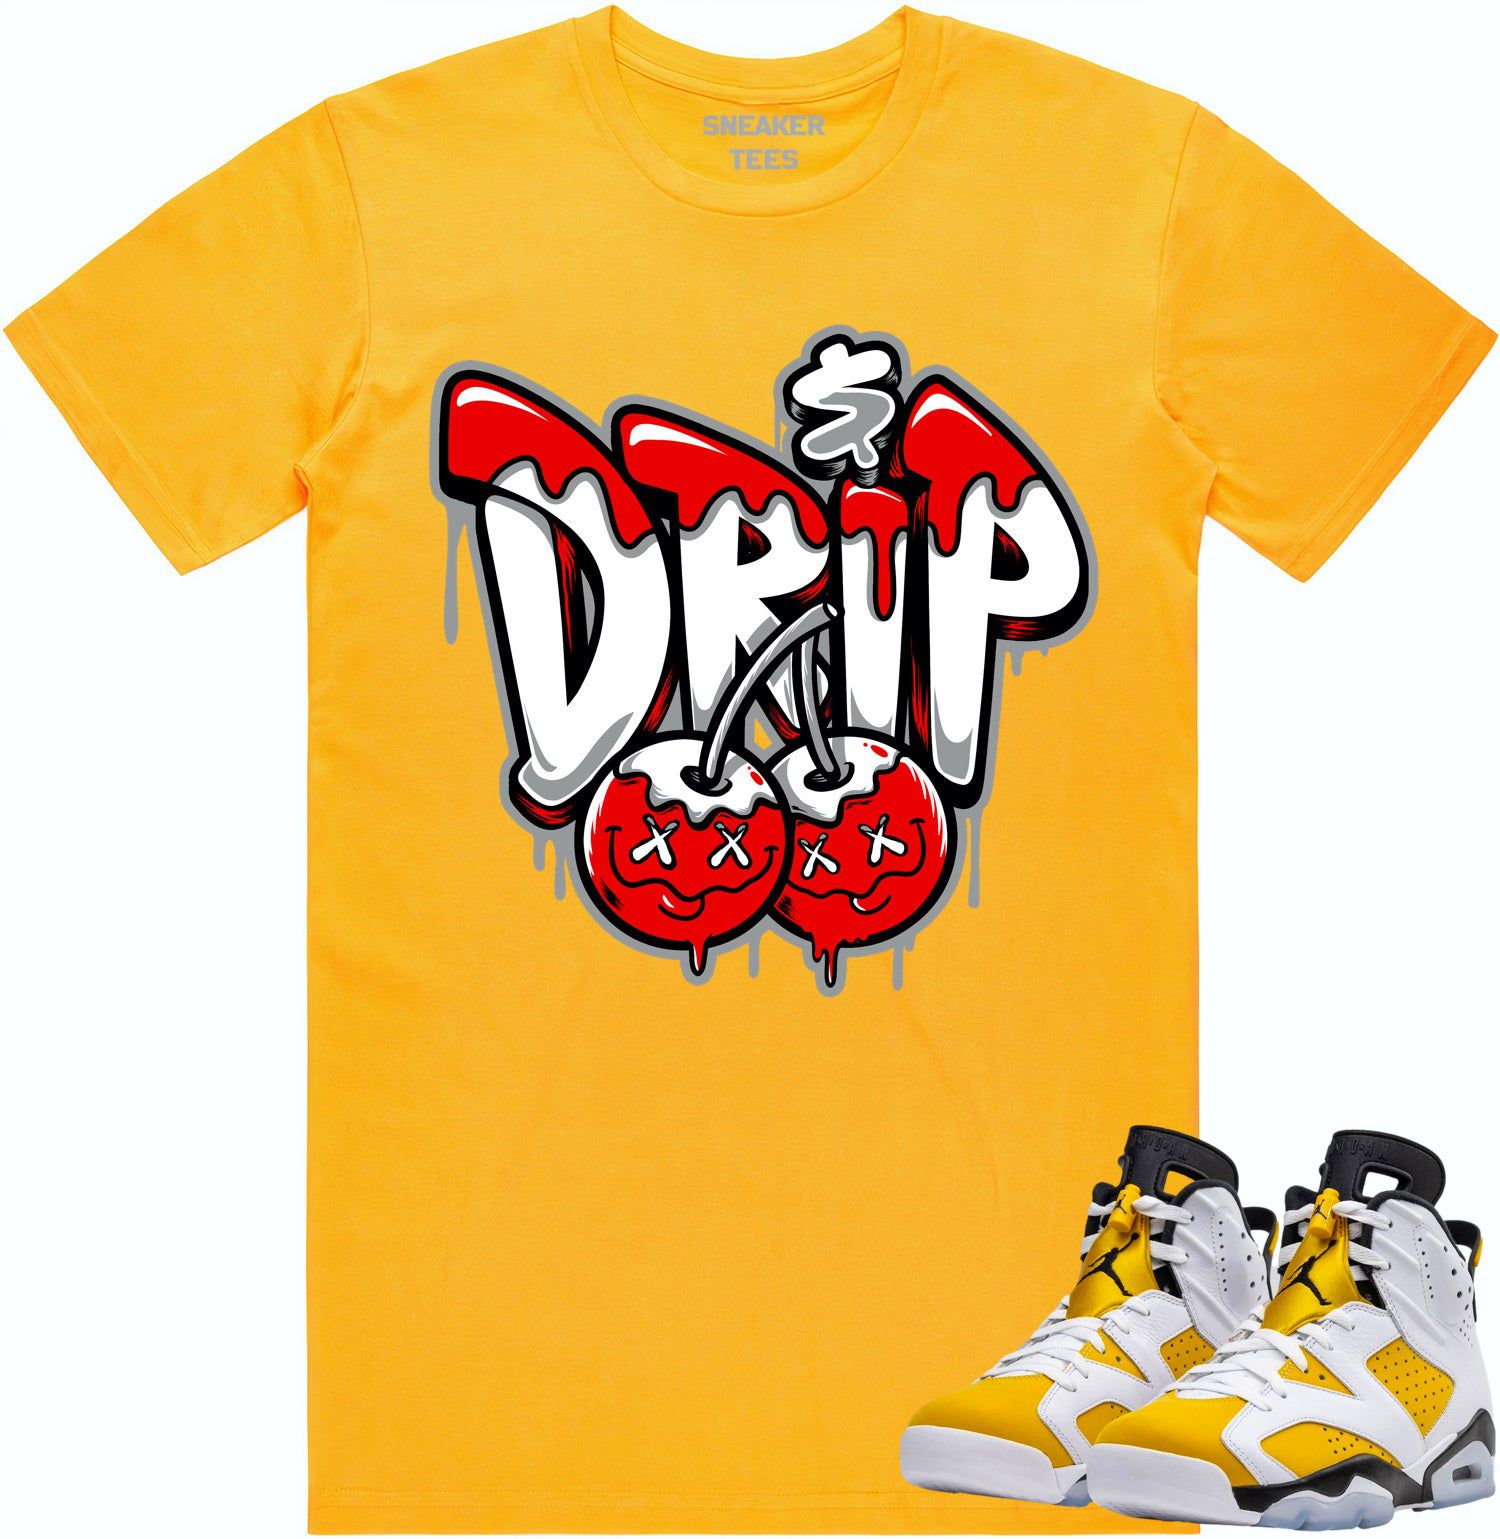 Yellow Ochre 6s Shirt - Jordan Retro 6 Ochre Sneaker Tees - Money Drip